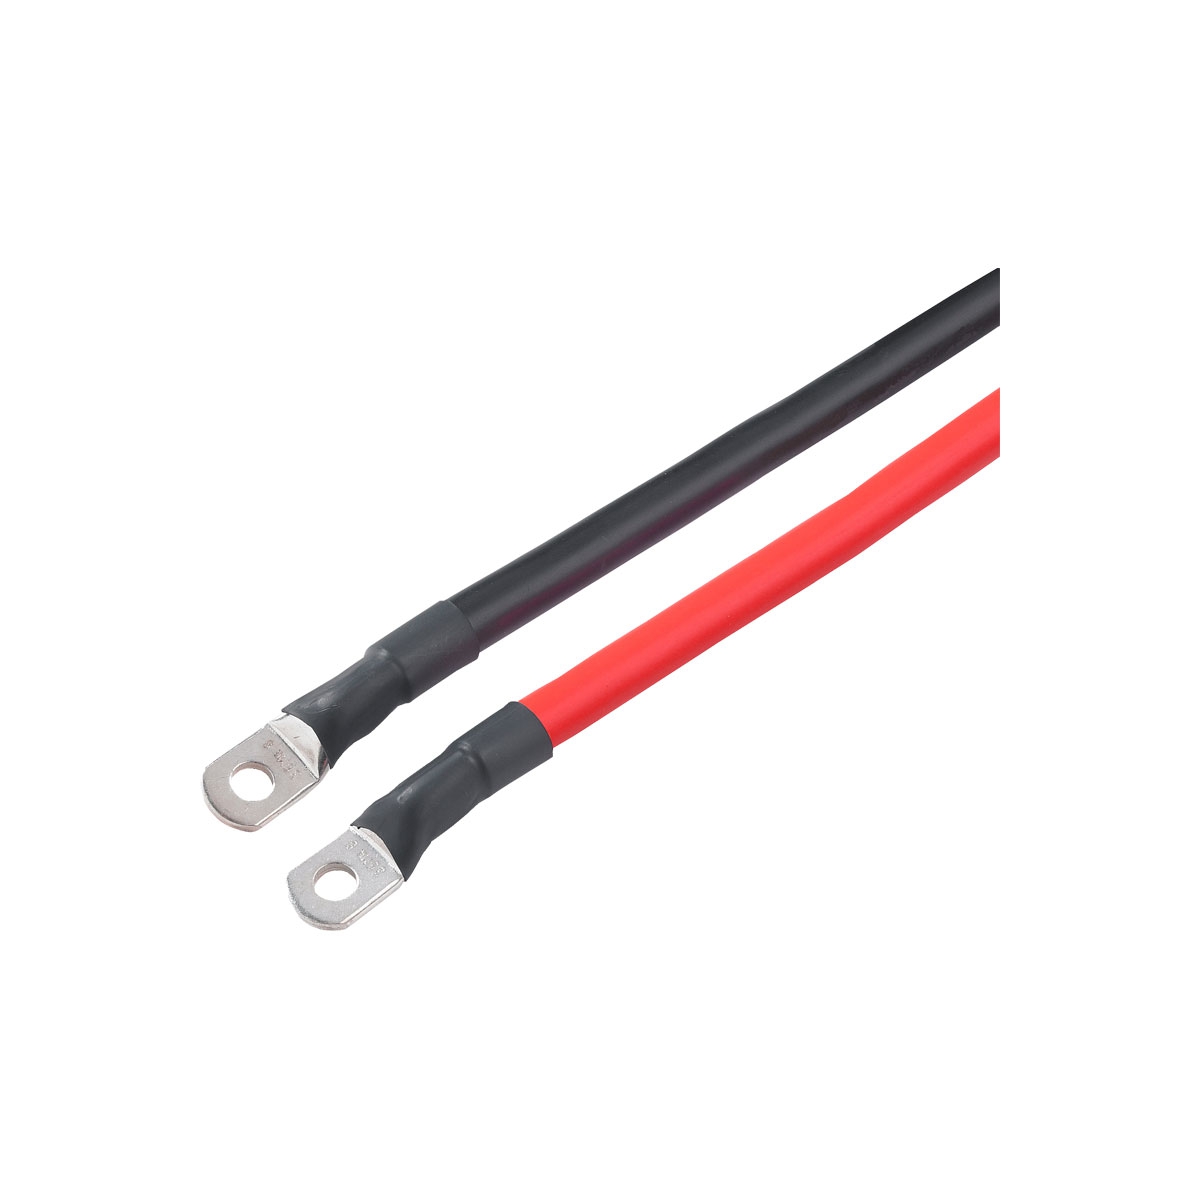 VOTRONIC Hochstrom-Kabelsatz rot-schwarz 25mm 1m - 2268